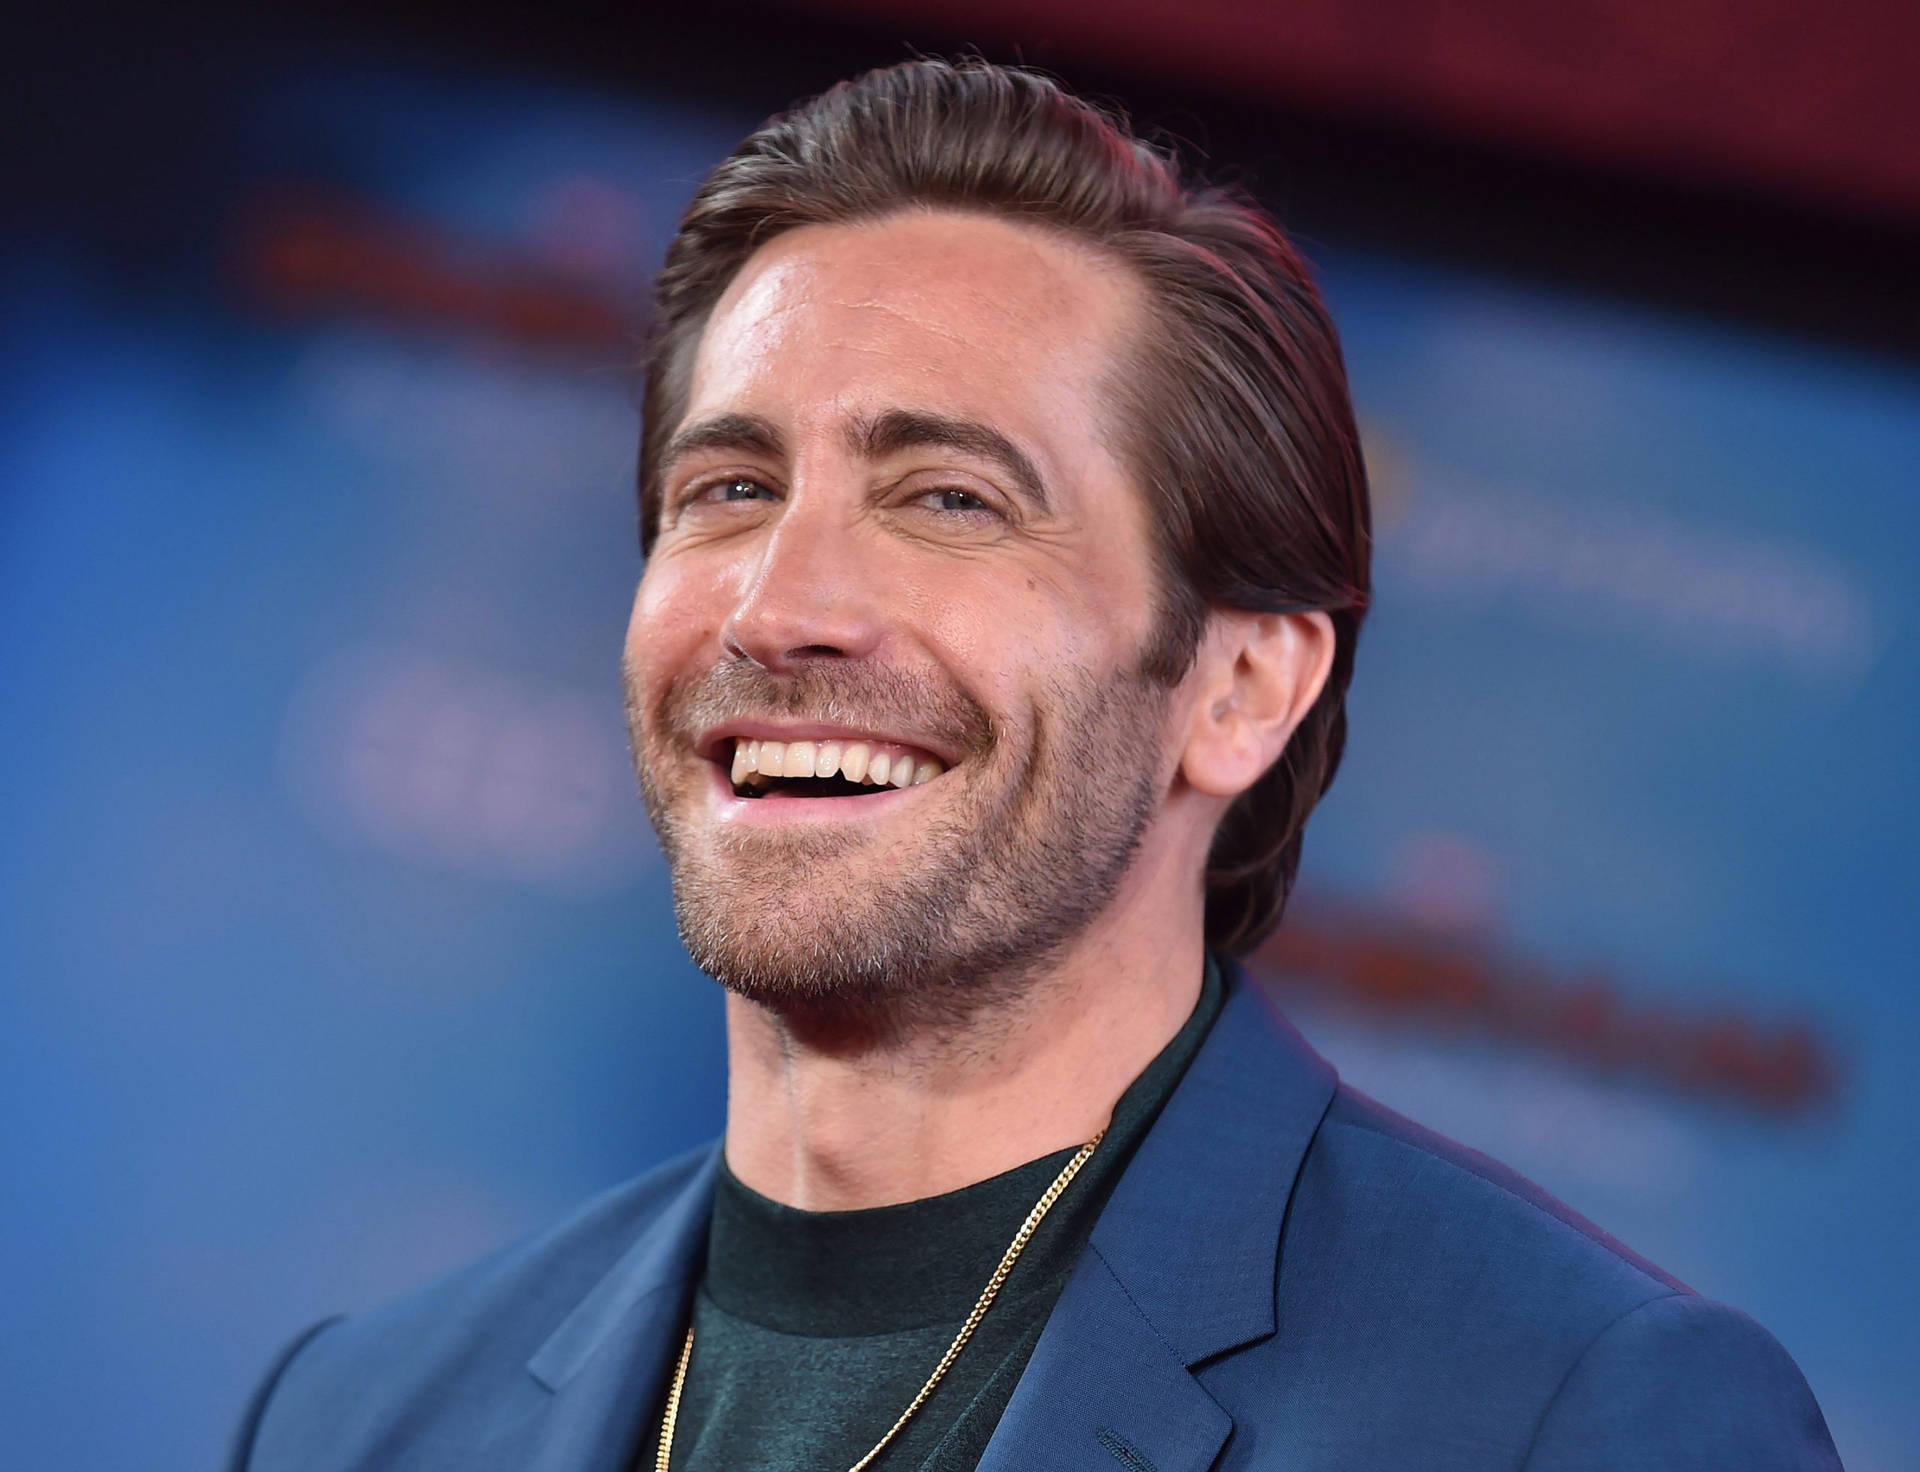 Smiling Jake Gyllenhaal